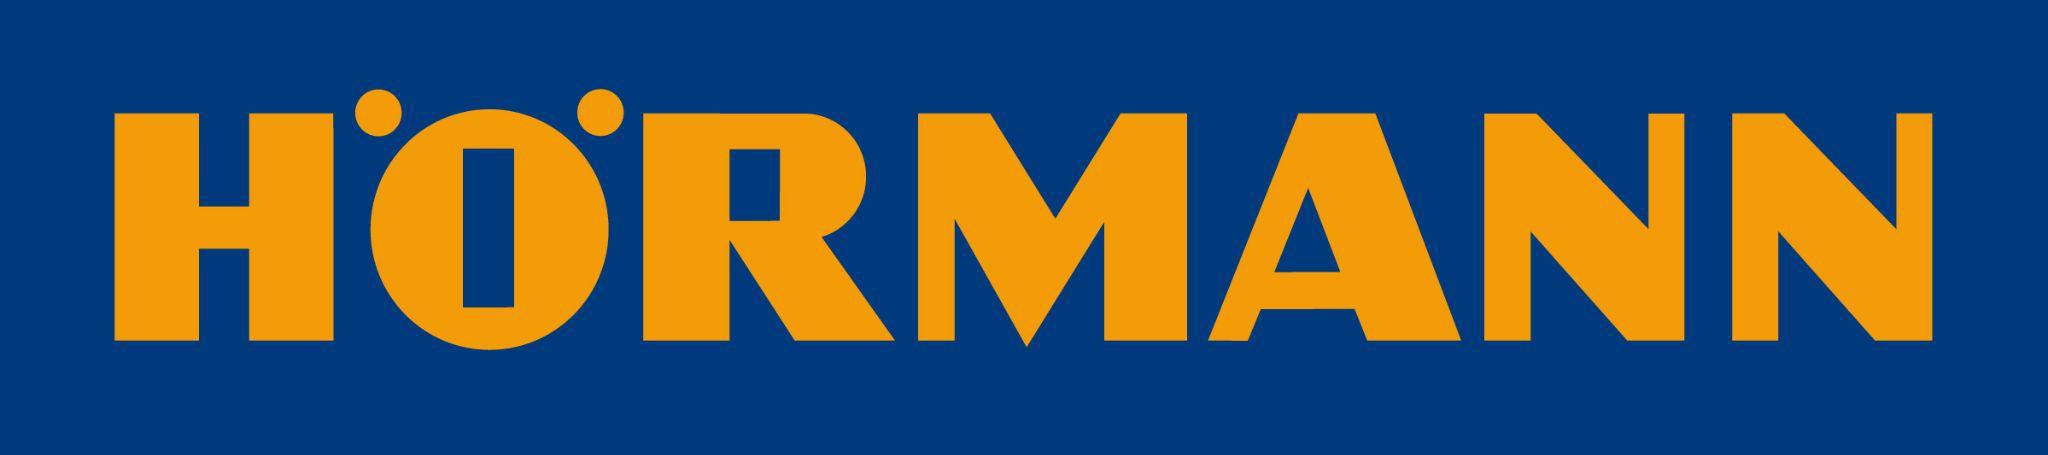 Modro-žlté logo firmy Hörmann